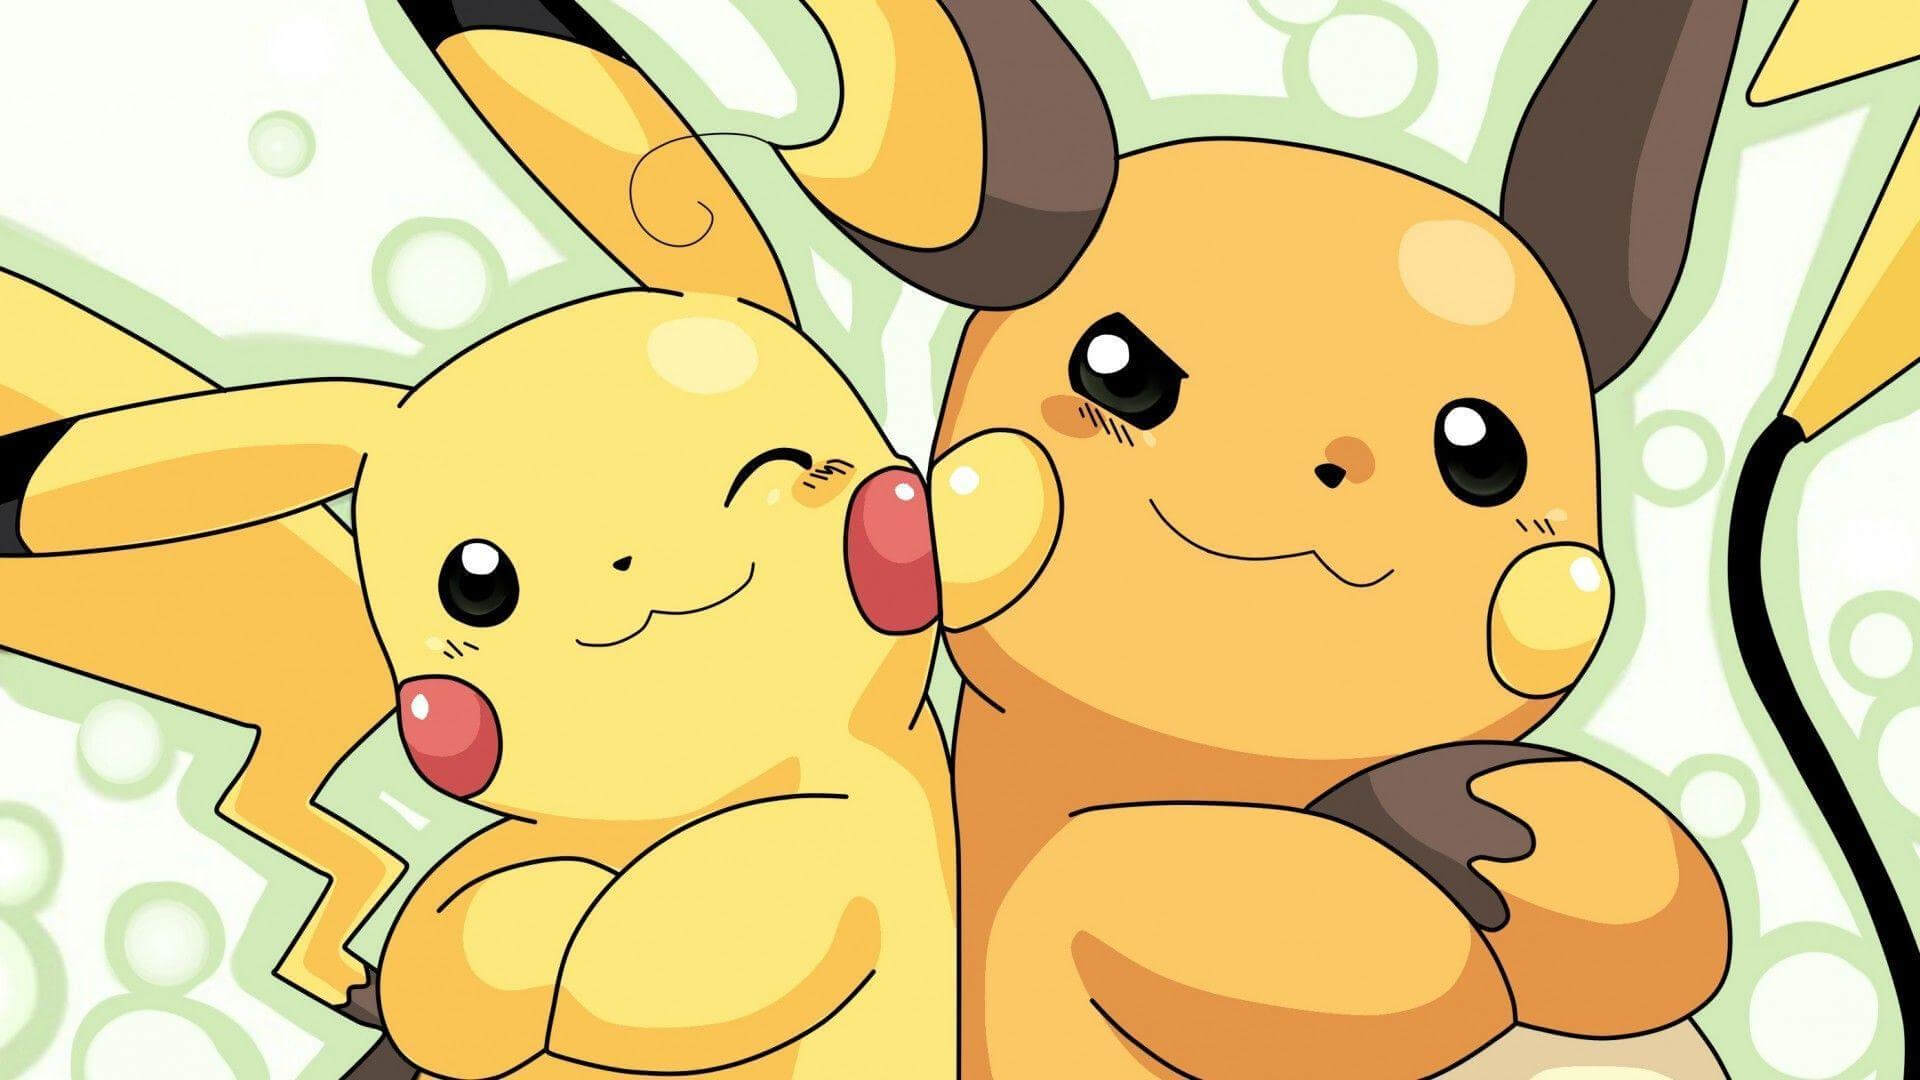 Pikachu (left) evolves to Raichu (right)